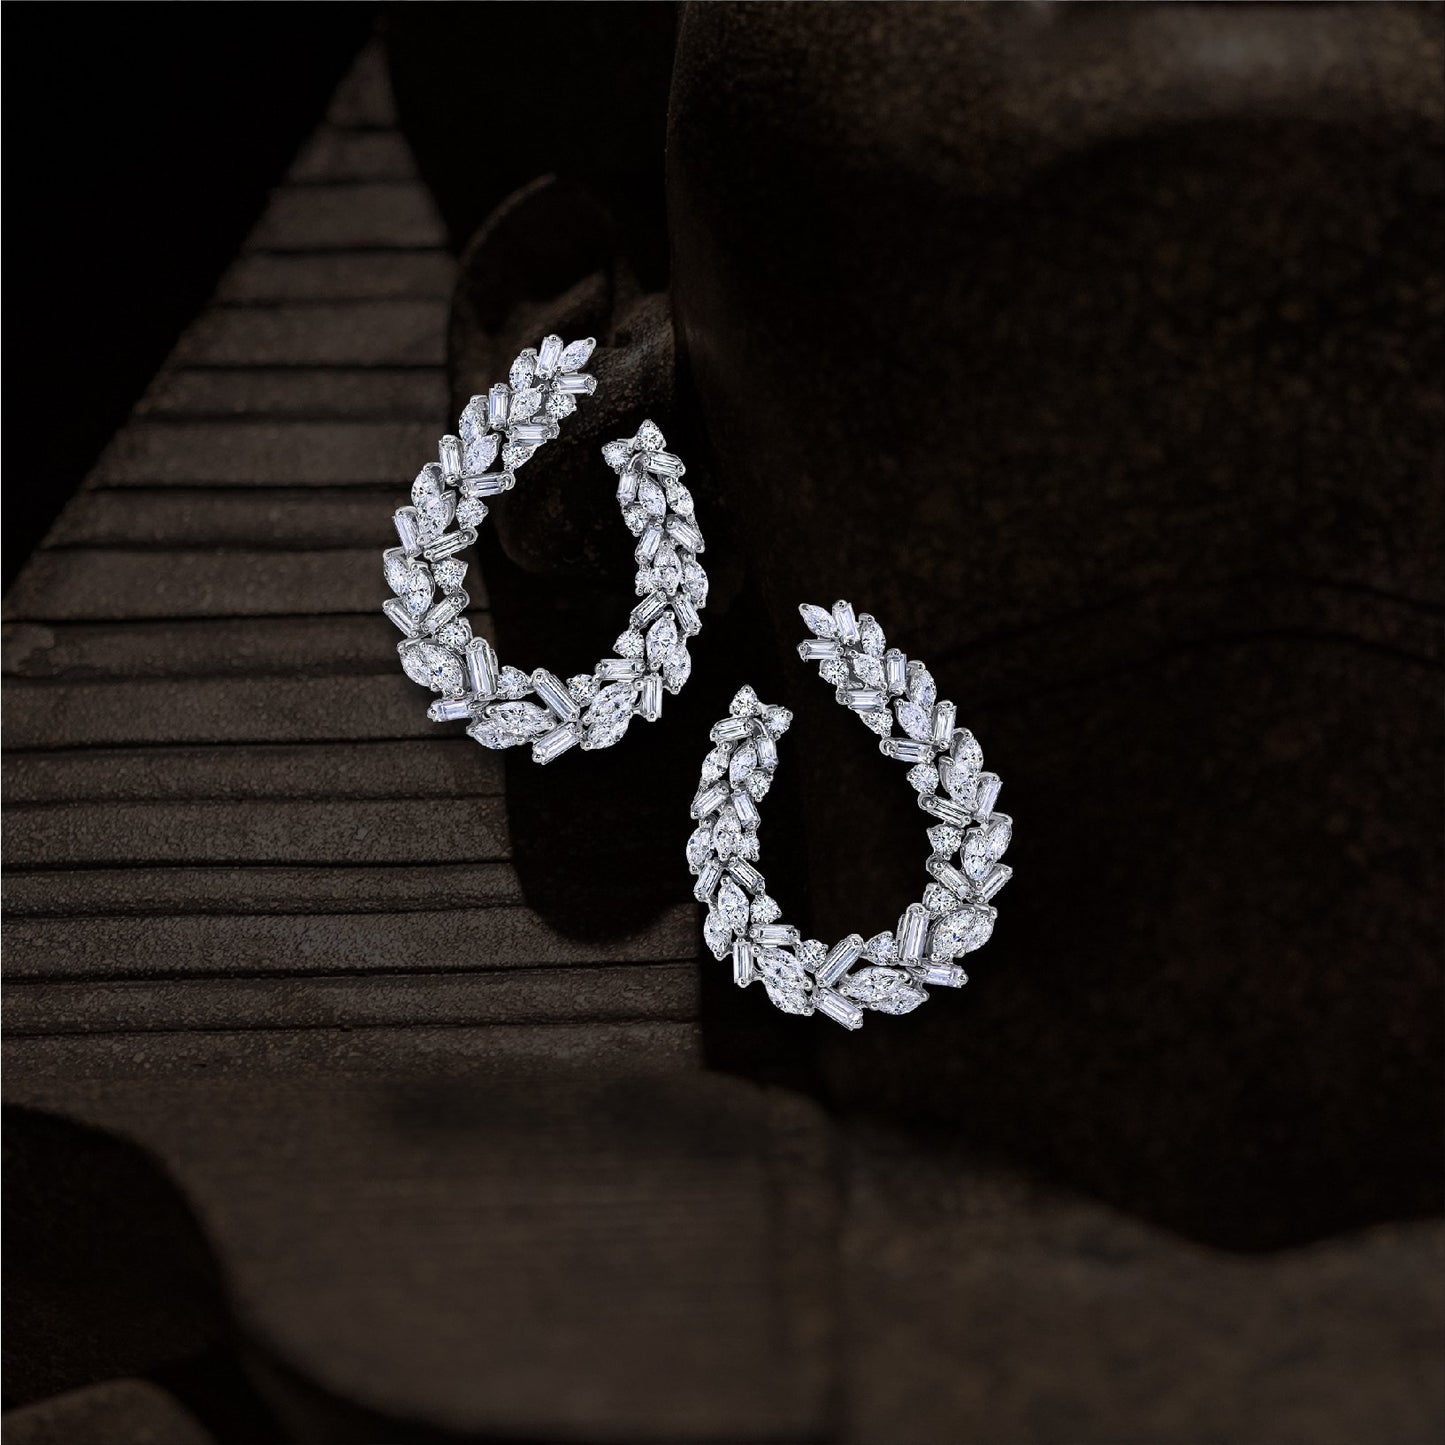 Diamond earring in Saudi Arabia | Order earrings online in Saudi Arabia